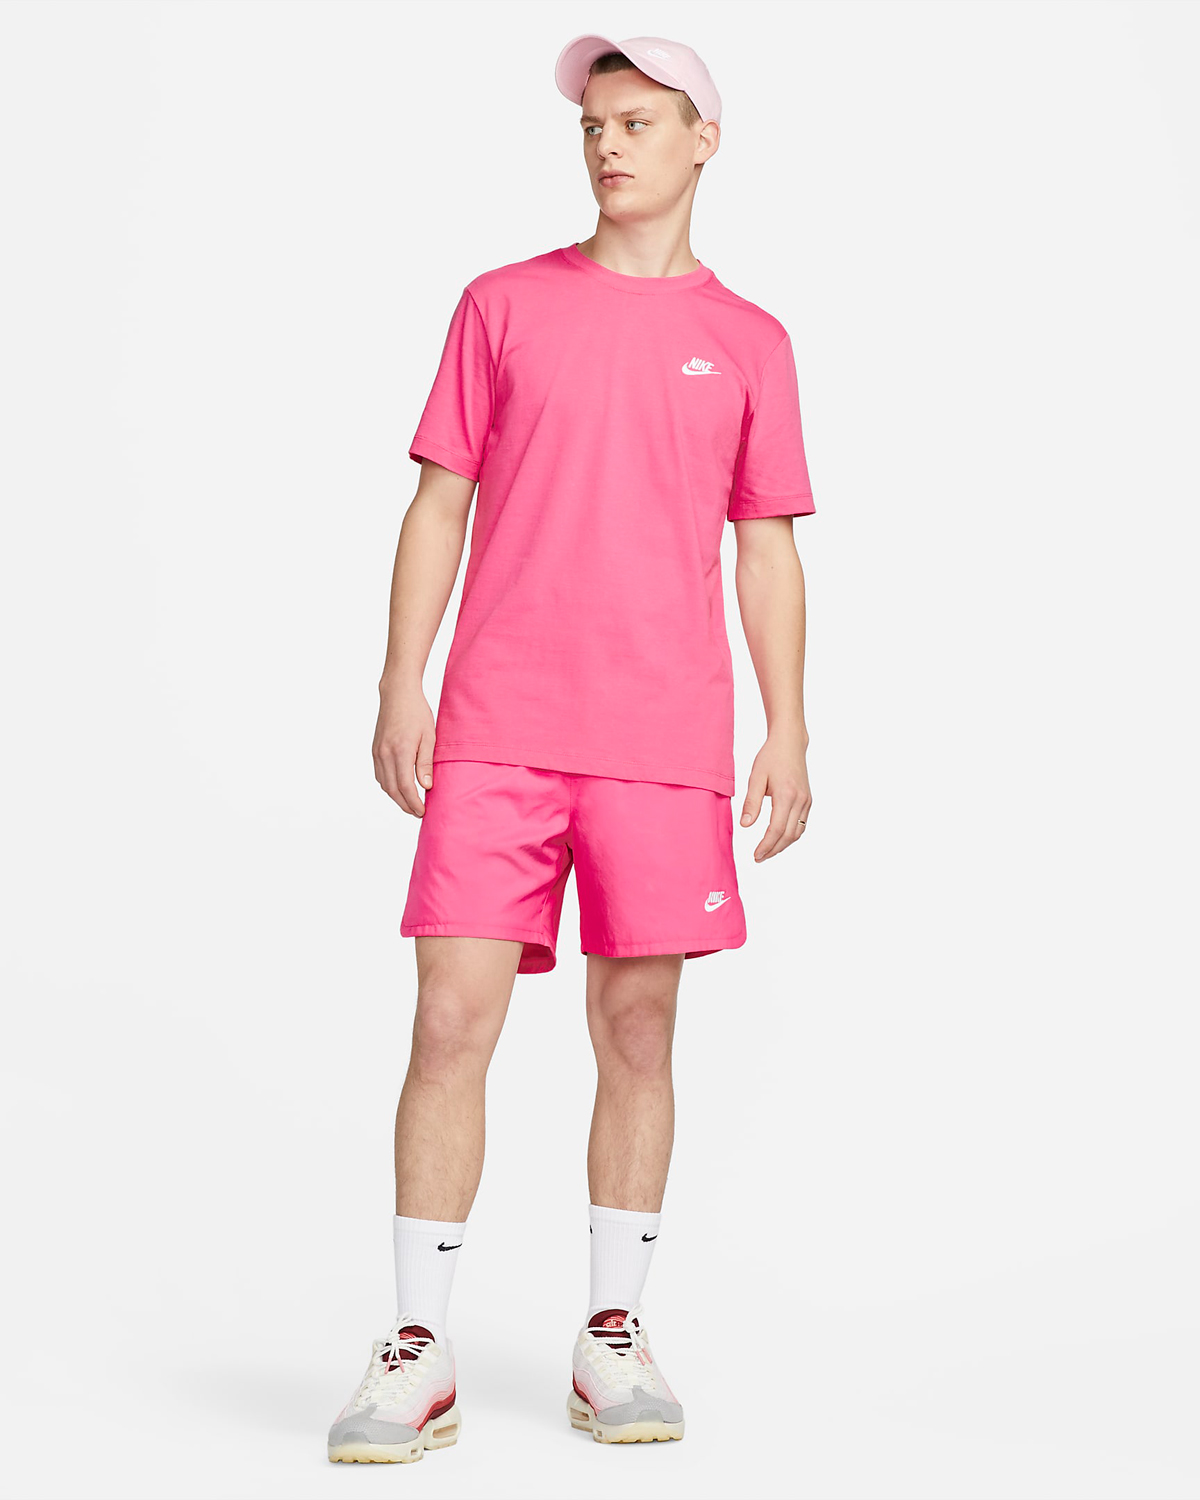 Nike-Sportswear-Pinksicle-Shirt-Shorts-Sneaker-Outfit